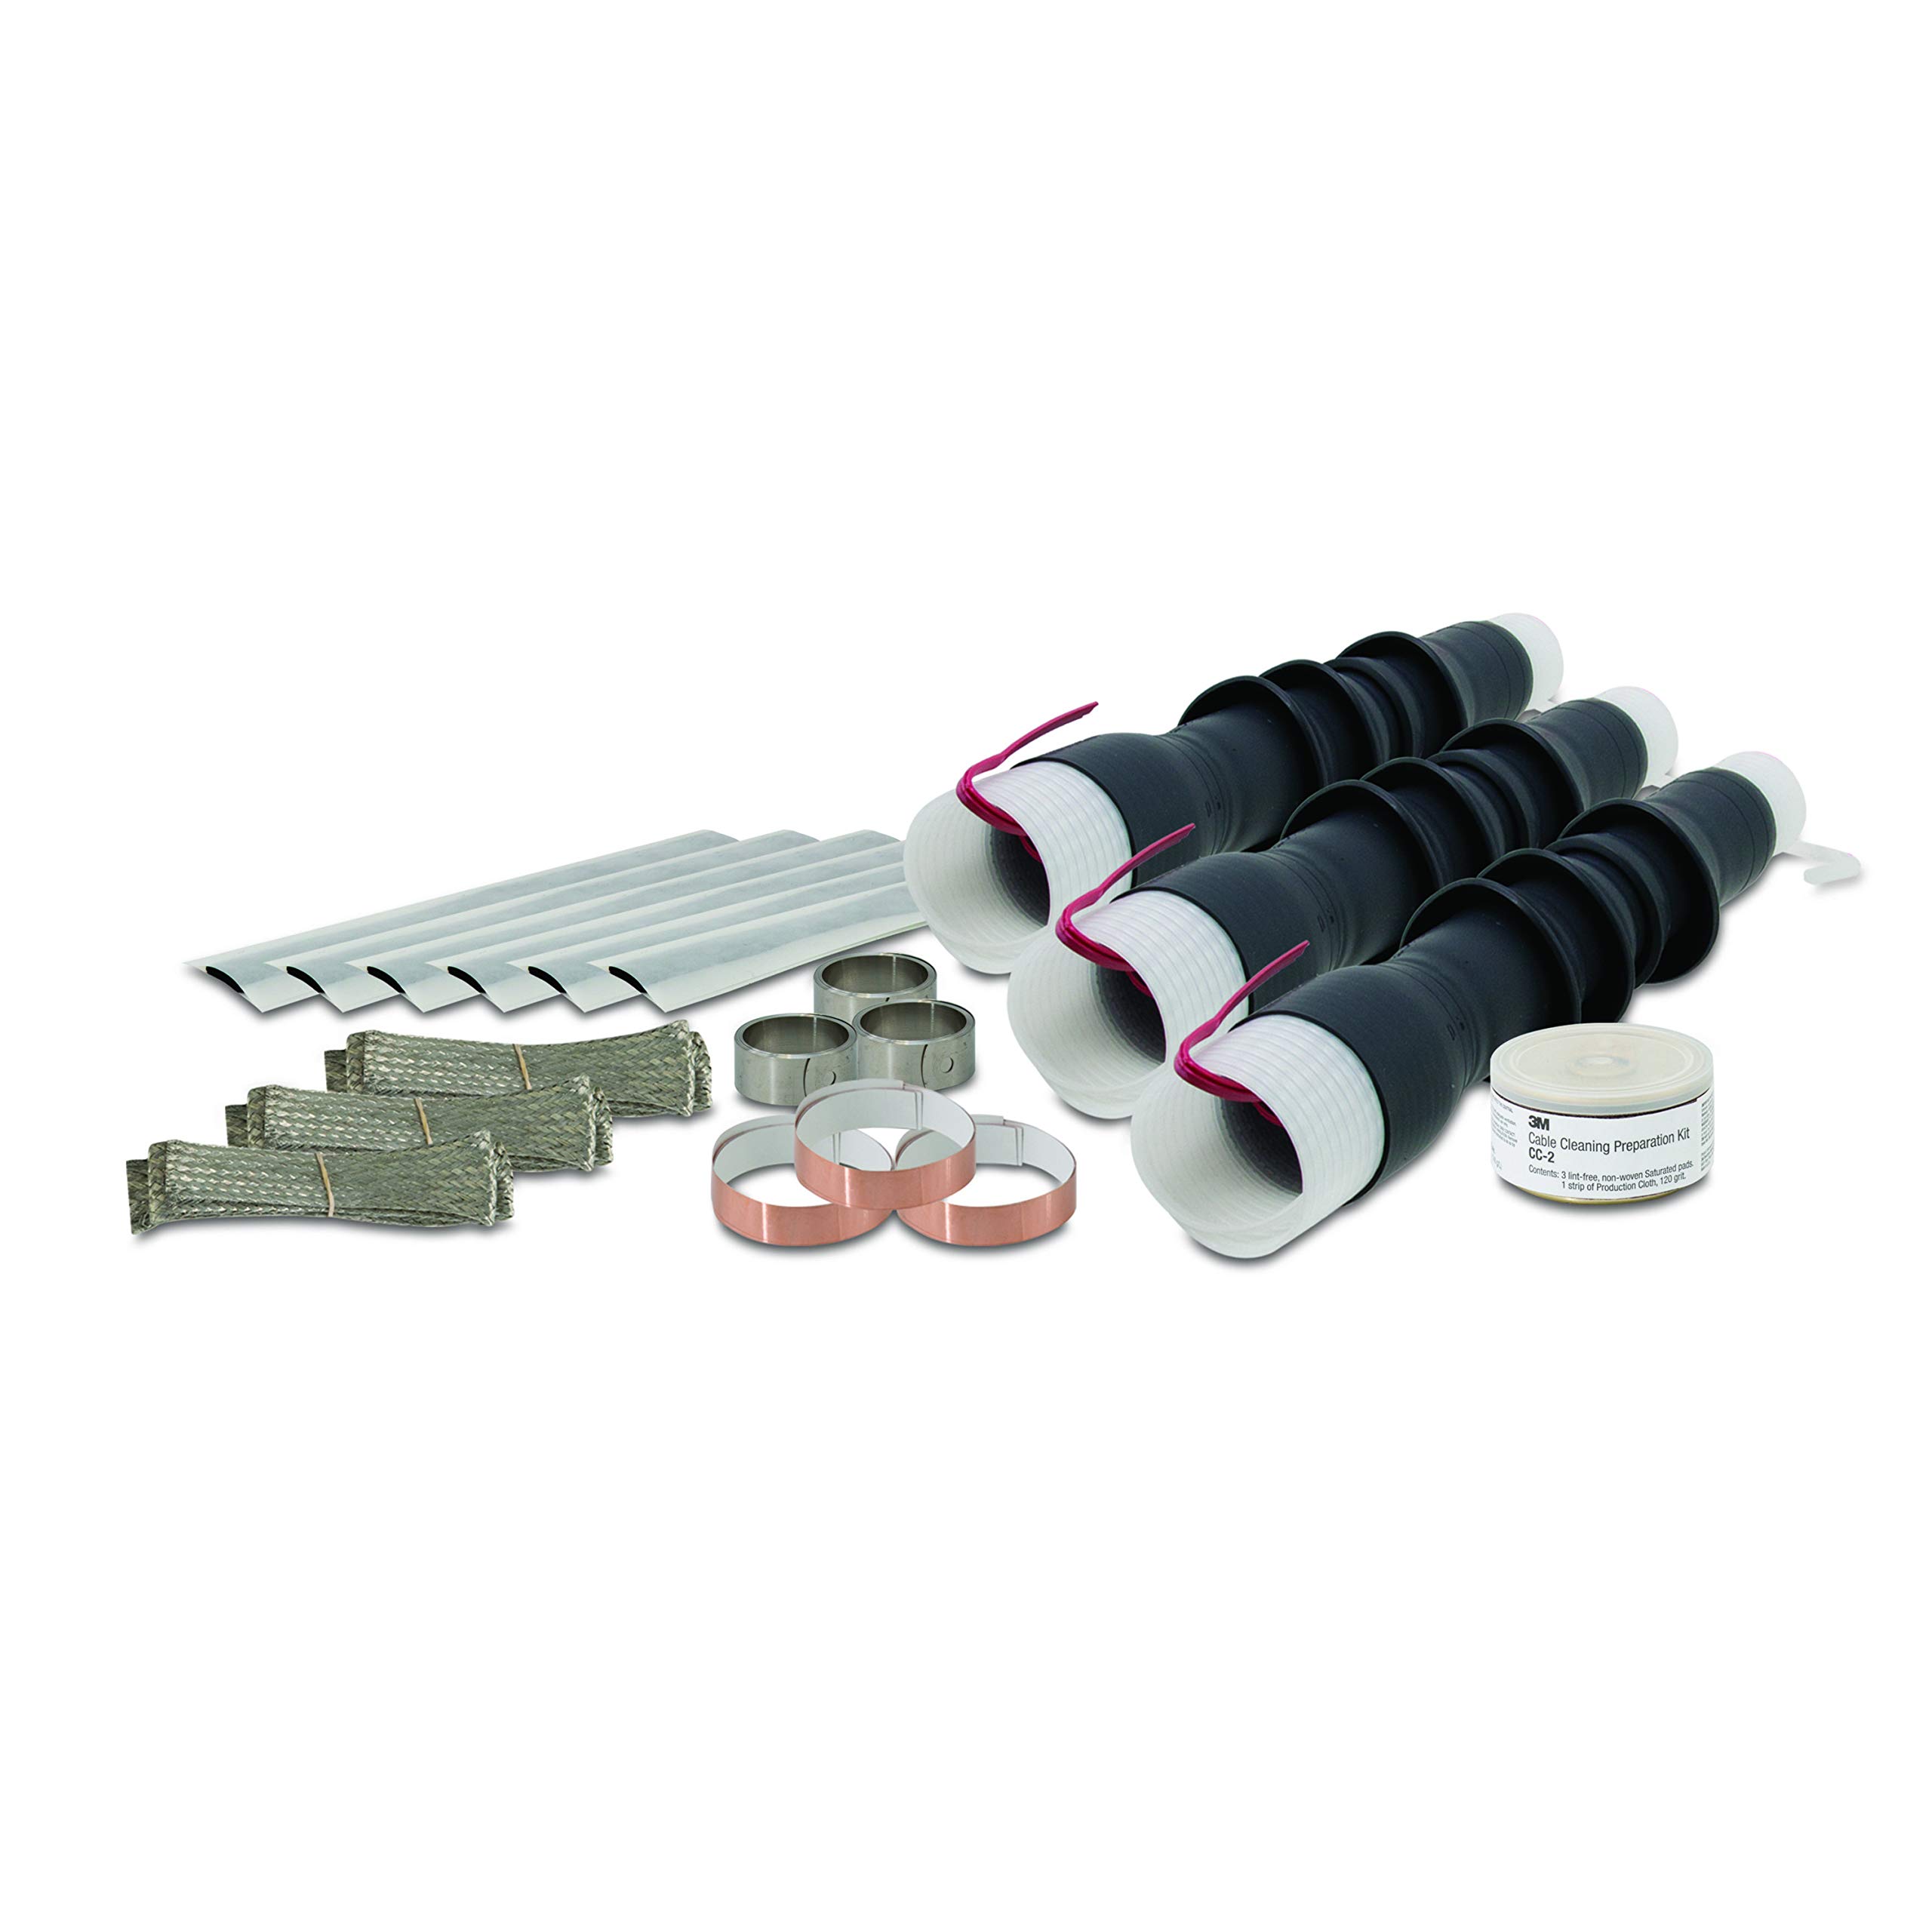 Cold Shrink QT-III 3/C Termination Kit 7624-T-95-3G, Tape/Wire/UniShield®, 5-8.7 kV, Insulation OD 0.92-1.18 in, 3/kit